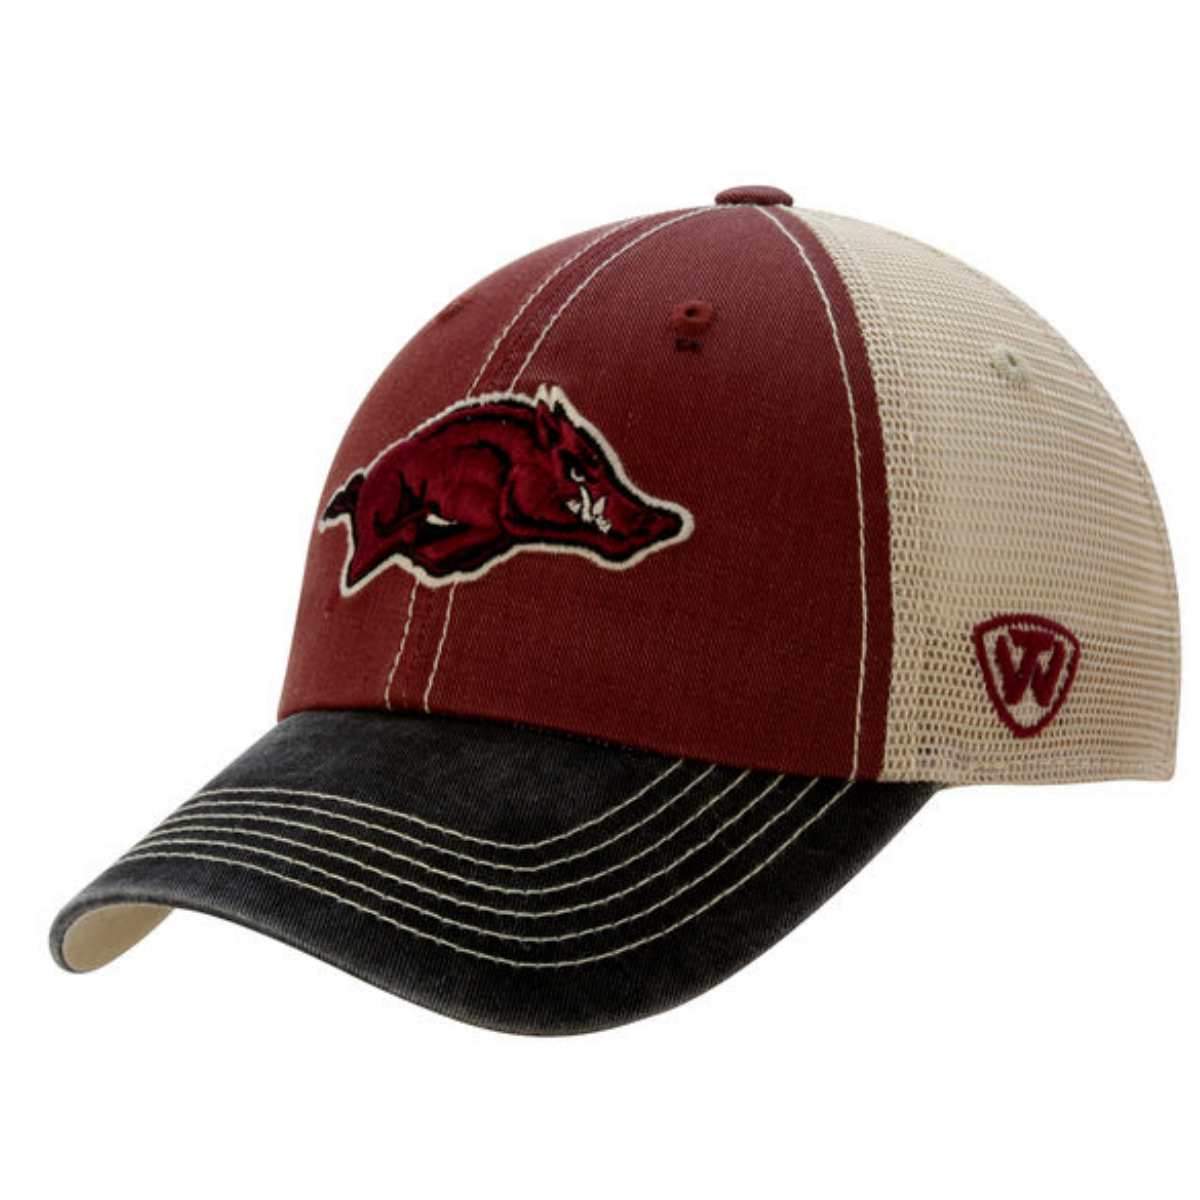 Arkansas Razorbacks Top of the World Red Offroad Adjustable Snapback Hat Cap